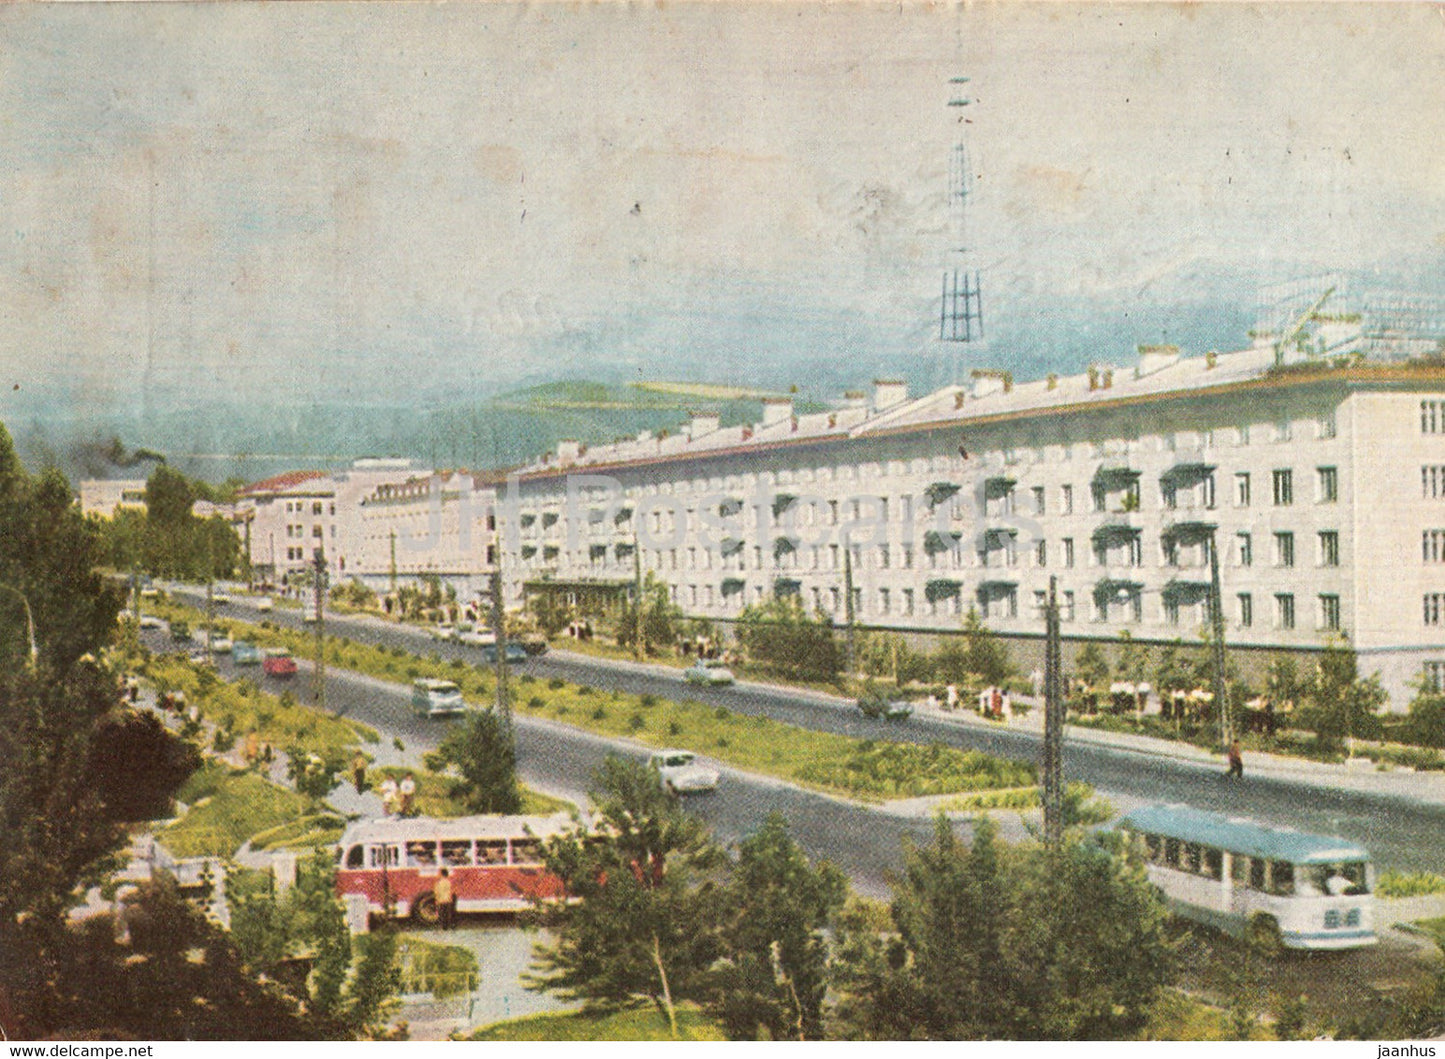 Almaty - Alma Ata - Abay prospect - 1966 - Kazakhstan USSR - used - JH Postcards